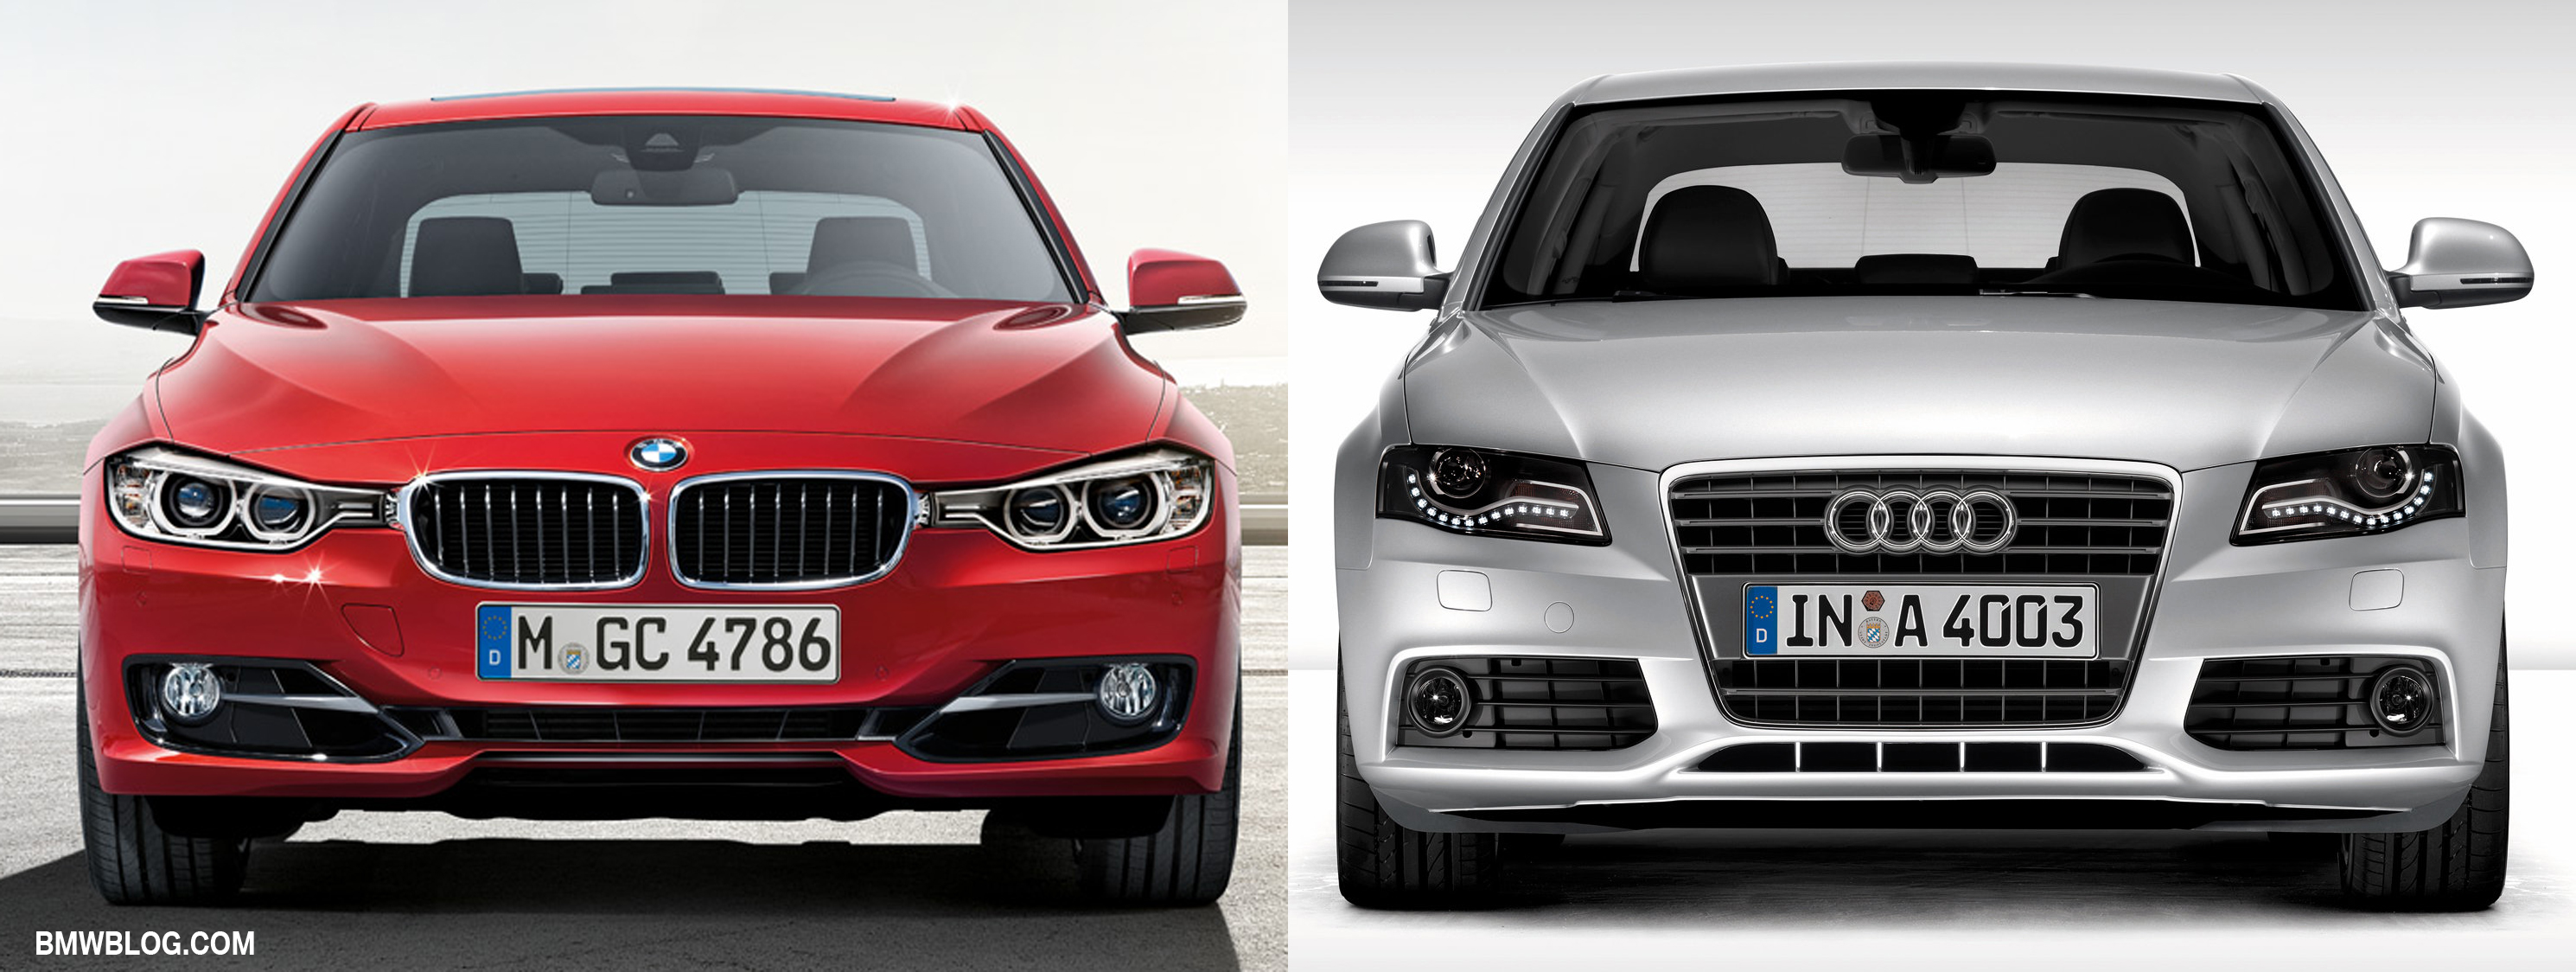 BMW-3-series-vs-audi-a4-photo7.jpg